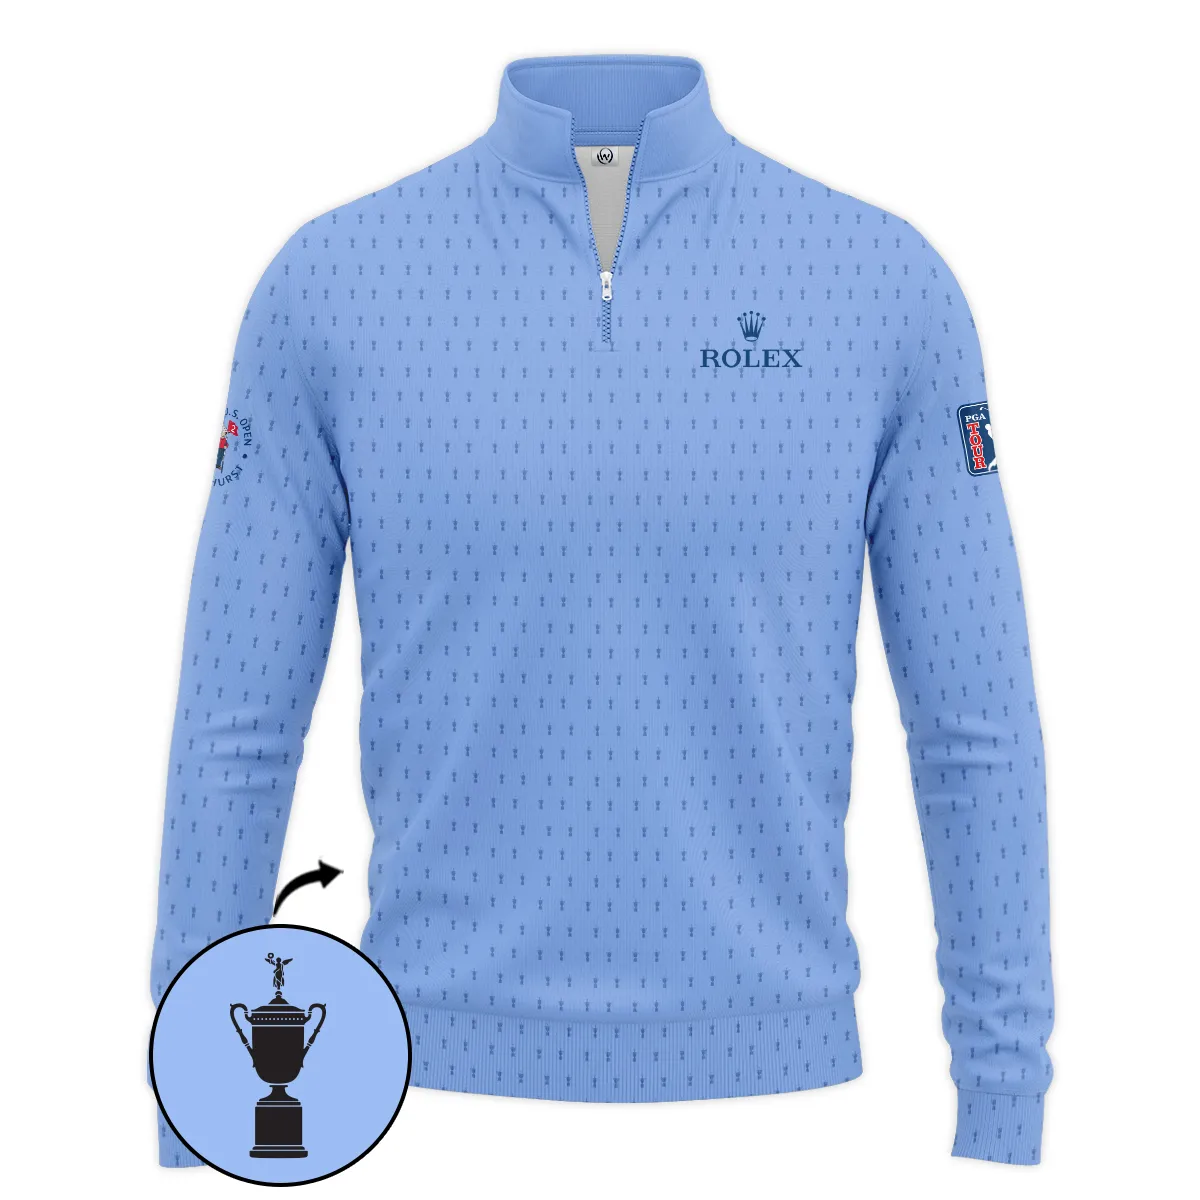 Golf Pattern Cup Blue 124th U.S. Open Pinehurst Pinehurst Rolex Polo Shirt Style Classic